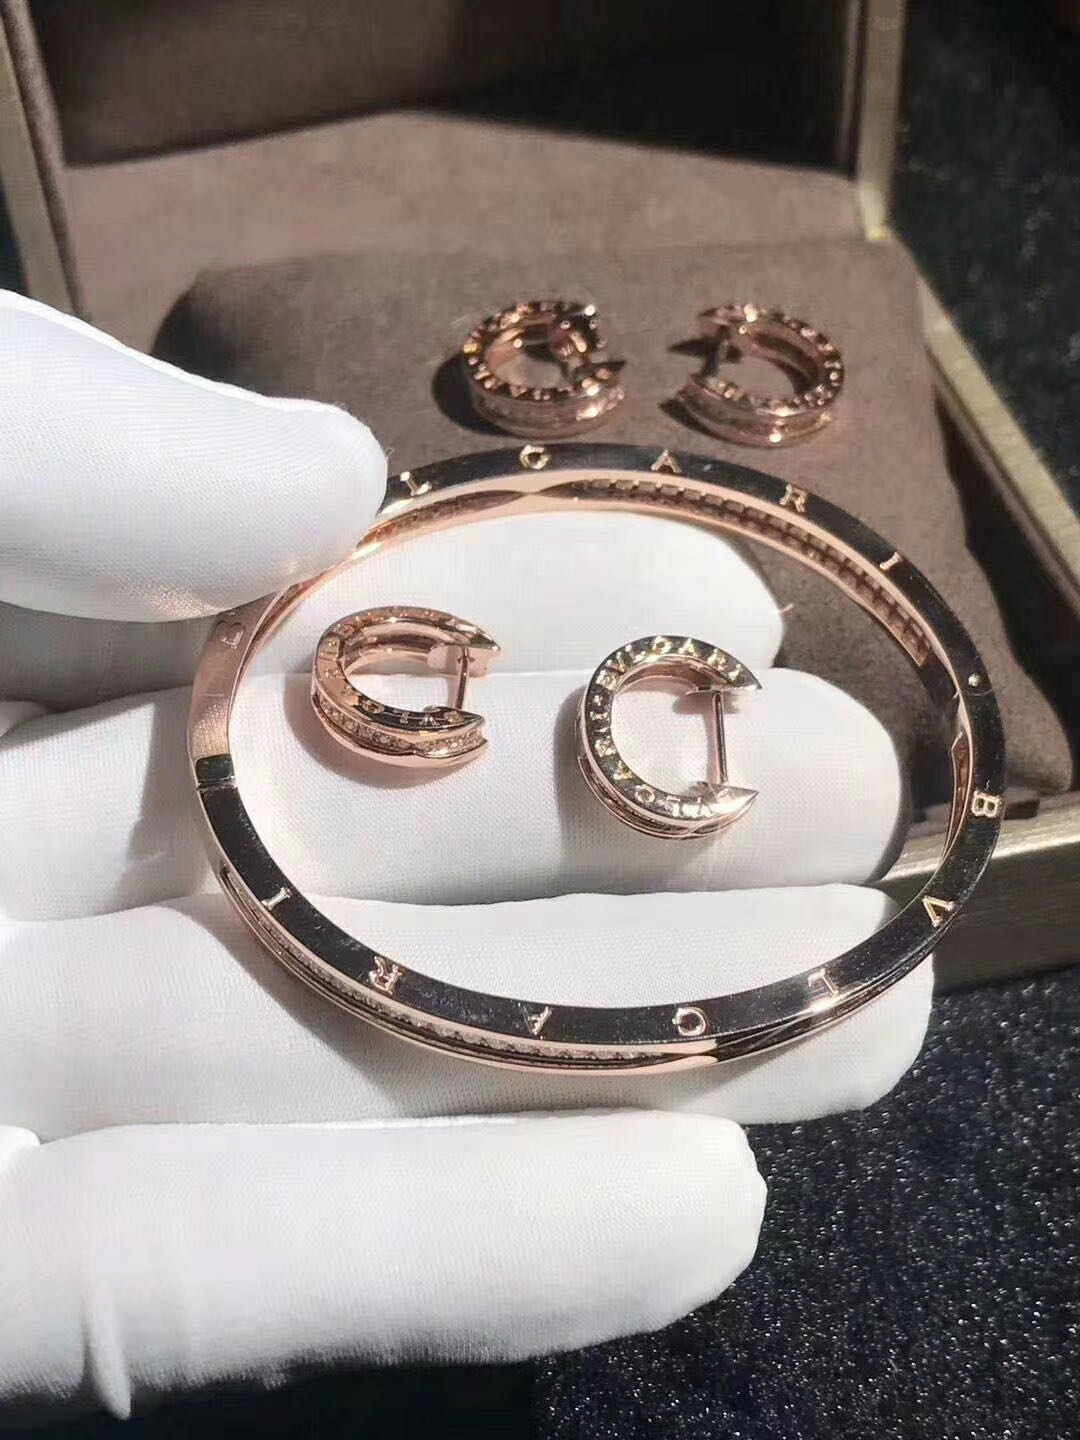 Bvlgari B.zero1 bangle bracelet in 18 kt rose gold, set with pavé diamonds on the spiral